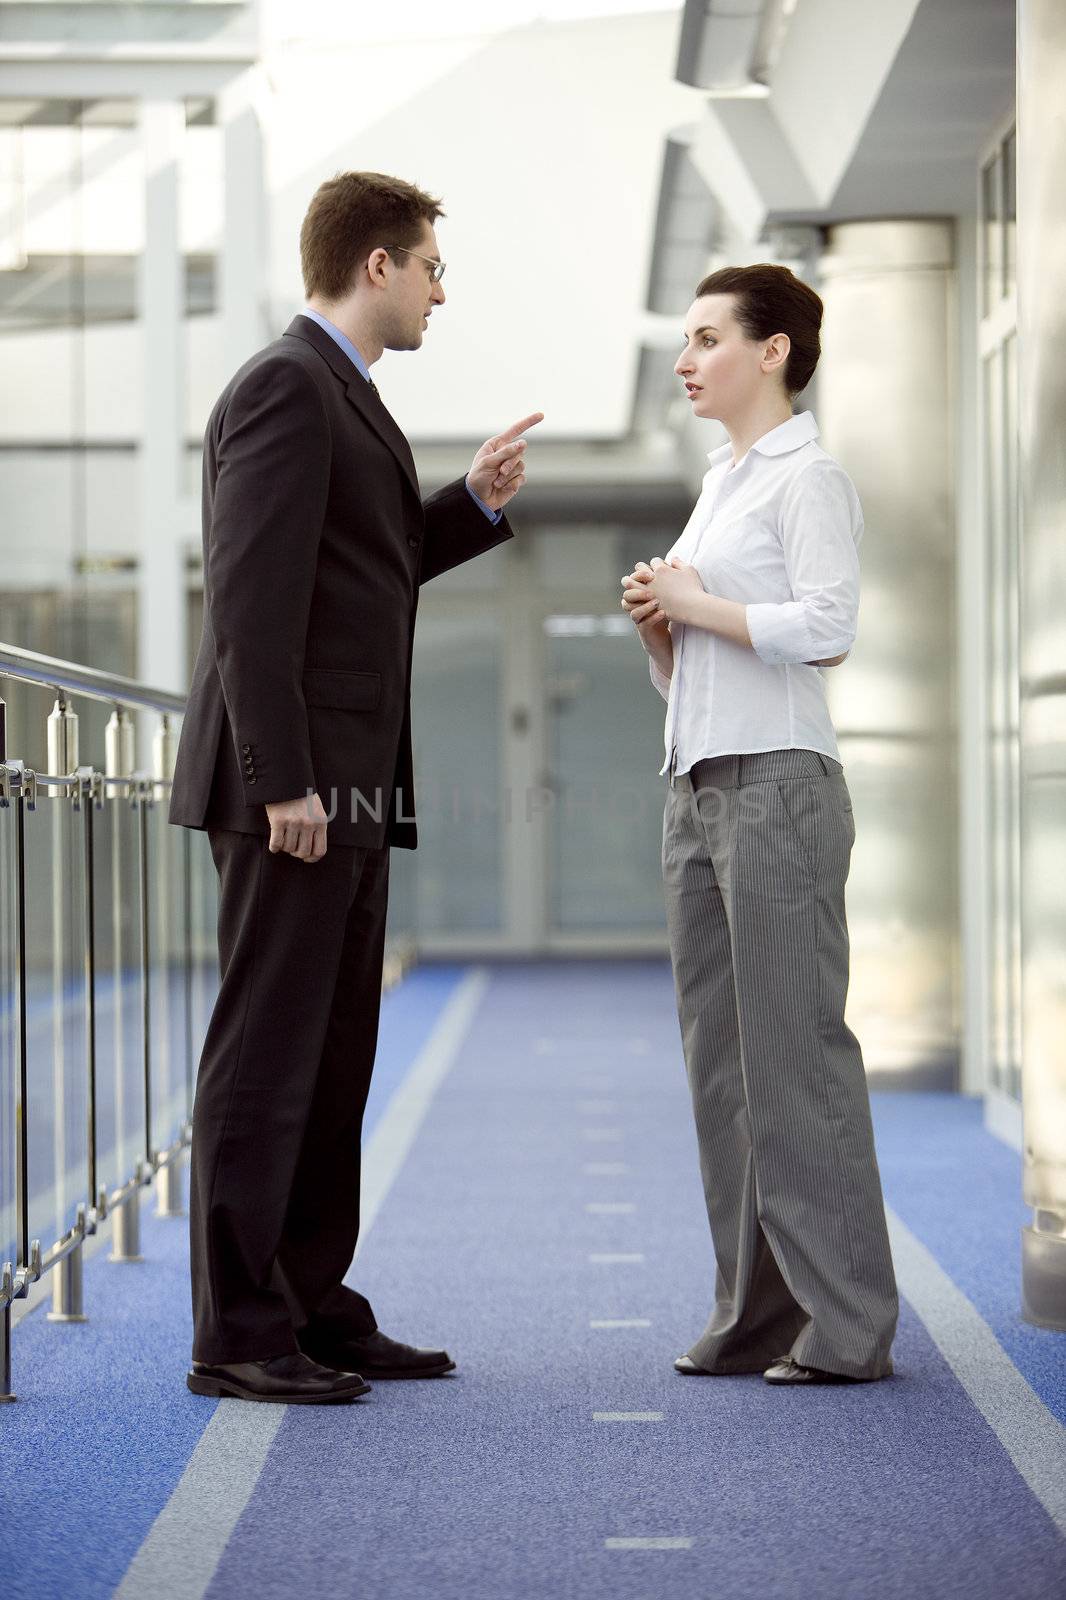 Businessman and businesswoman having argument in modern office building corridor